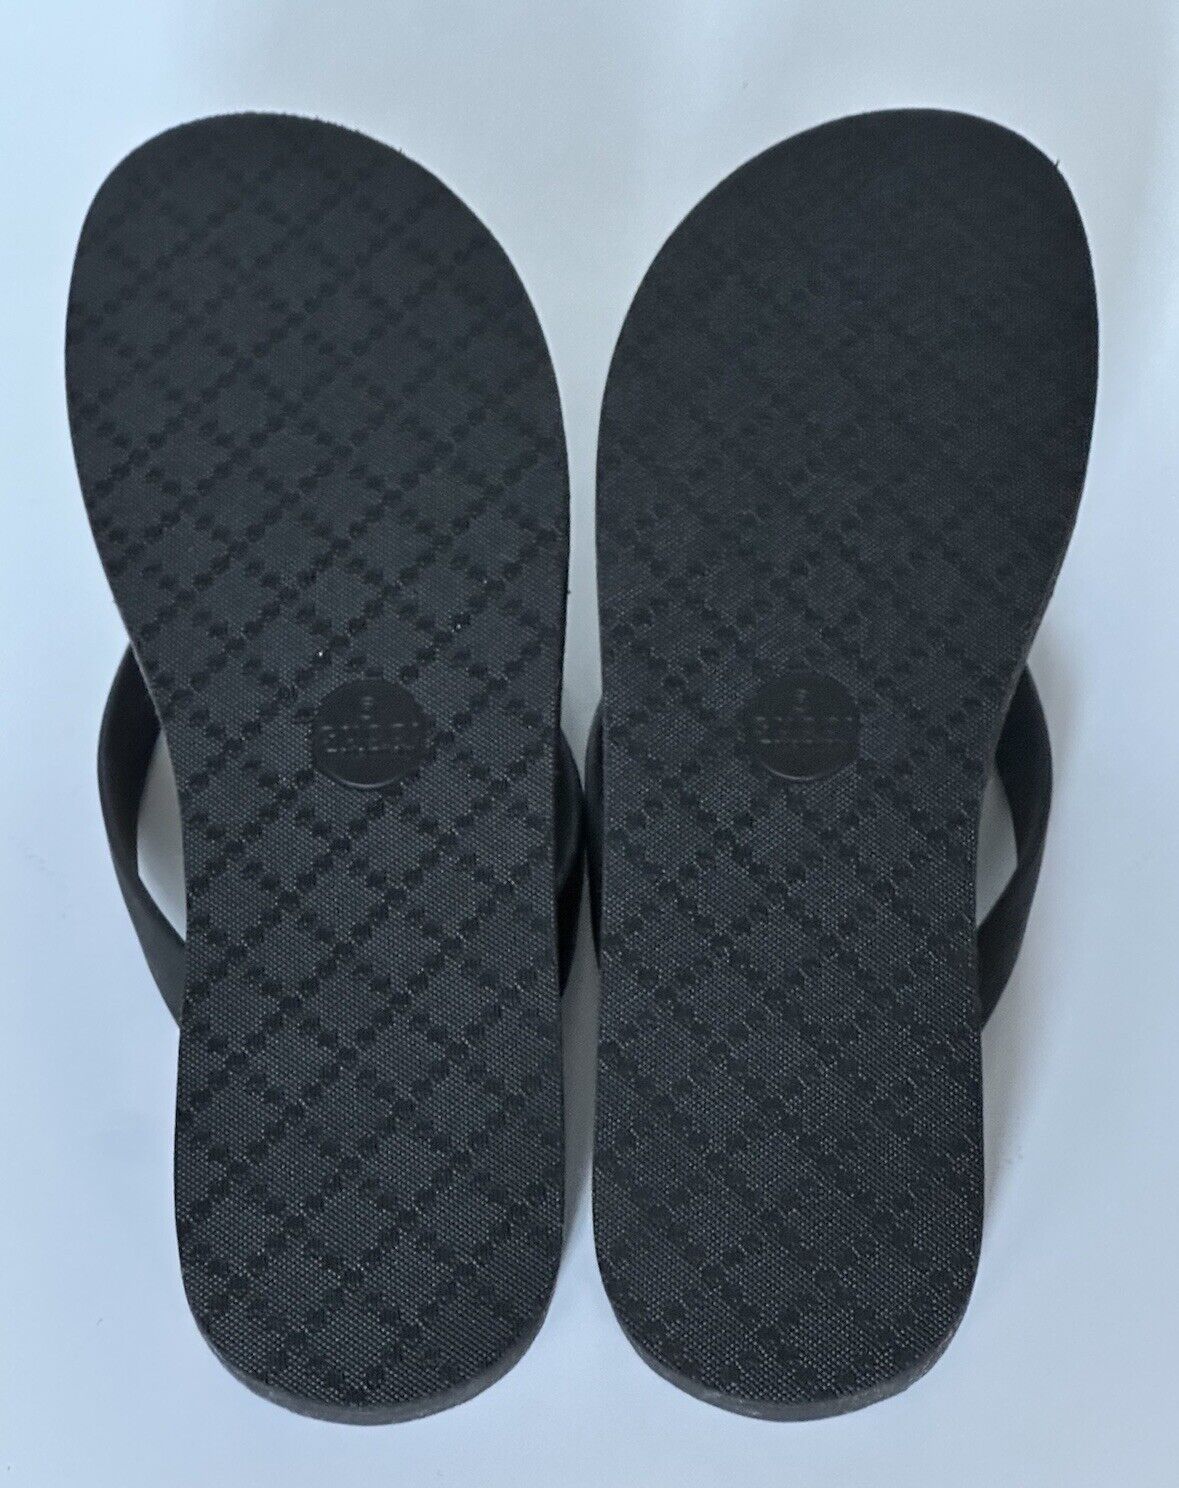 NIB Gucci Men's Black Double G Thong Flip Flops 10.5 US (Gucci 10) 659229 Italy